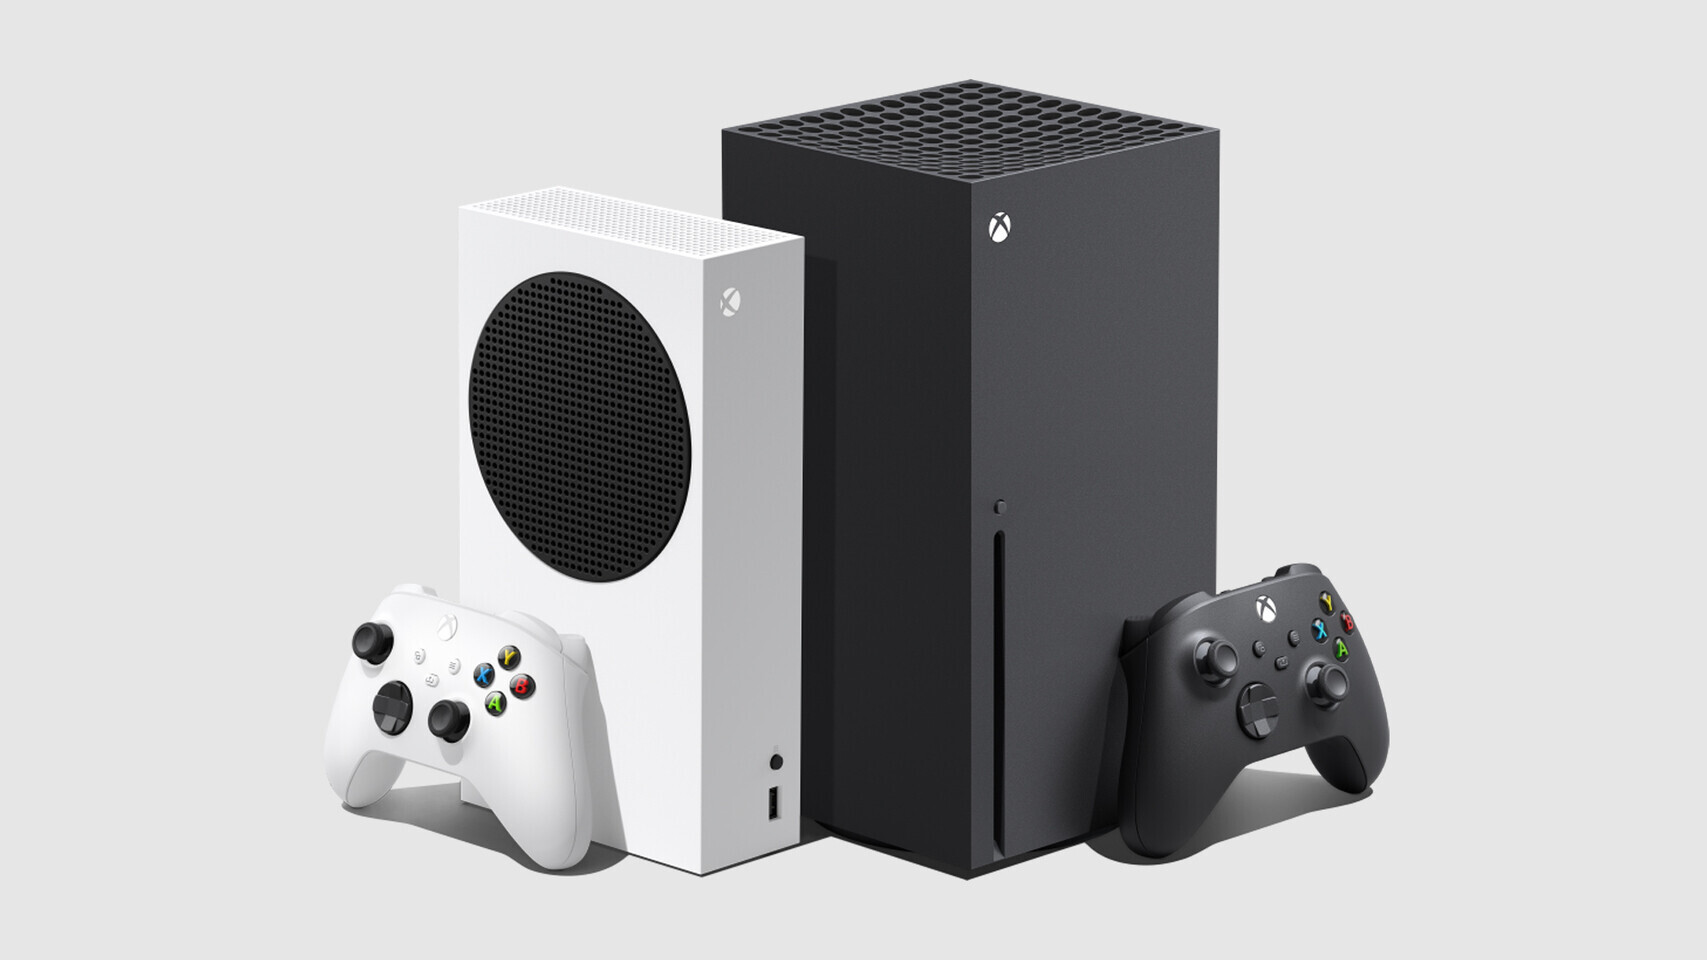 H Microsoft δεν σχεδιάζει να αυξήσει τις τιμές των Xbox Series X|S